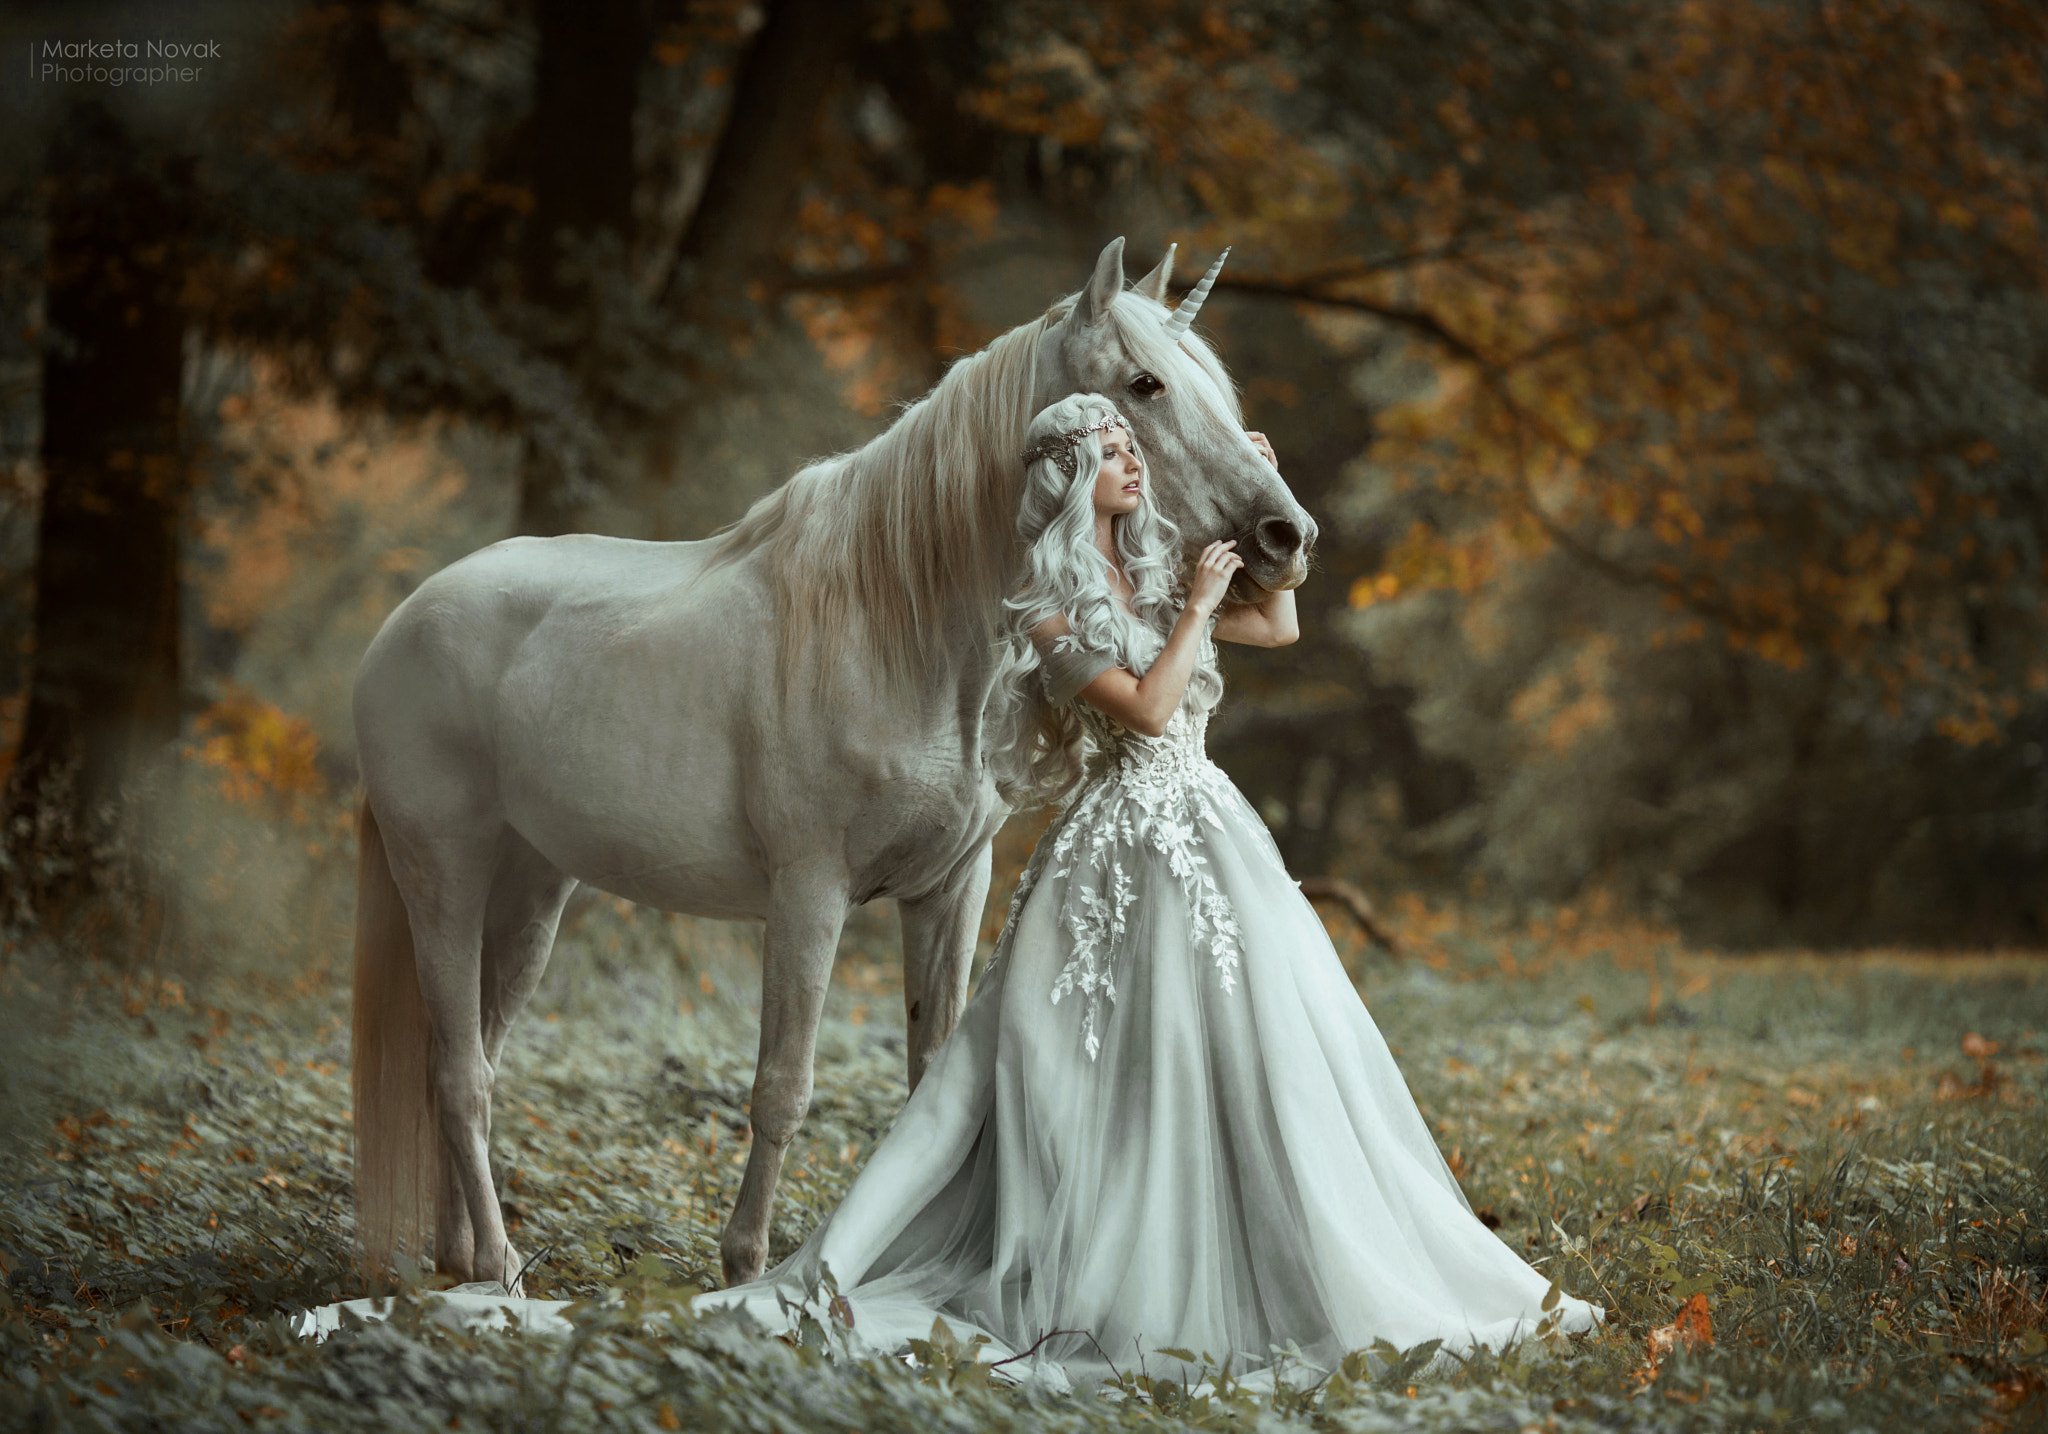 Autumn unicorn by Marketa Novak / 500px